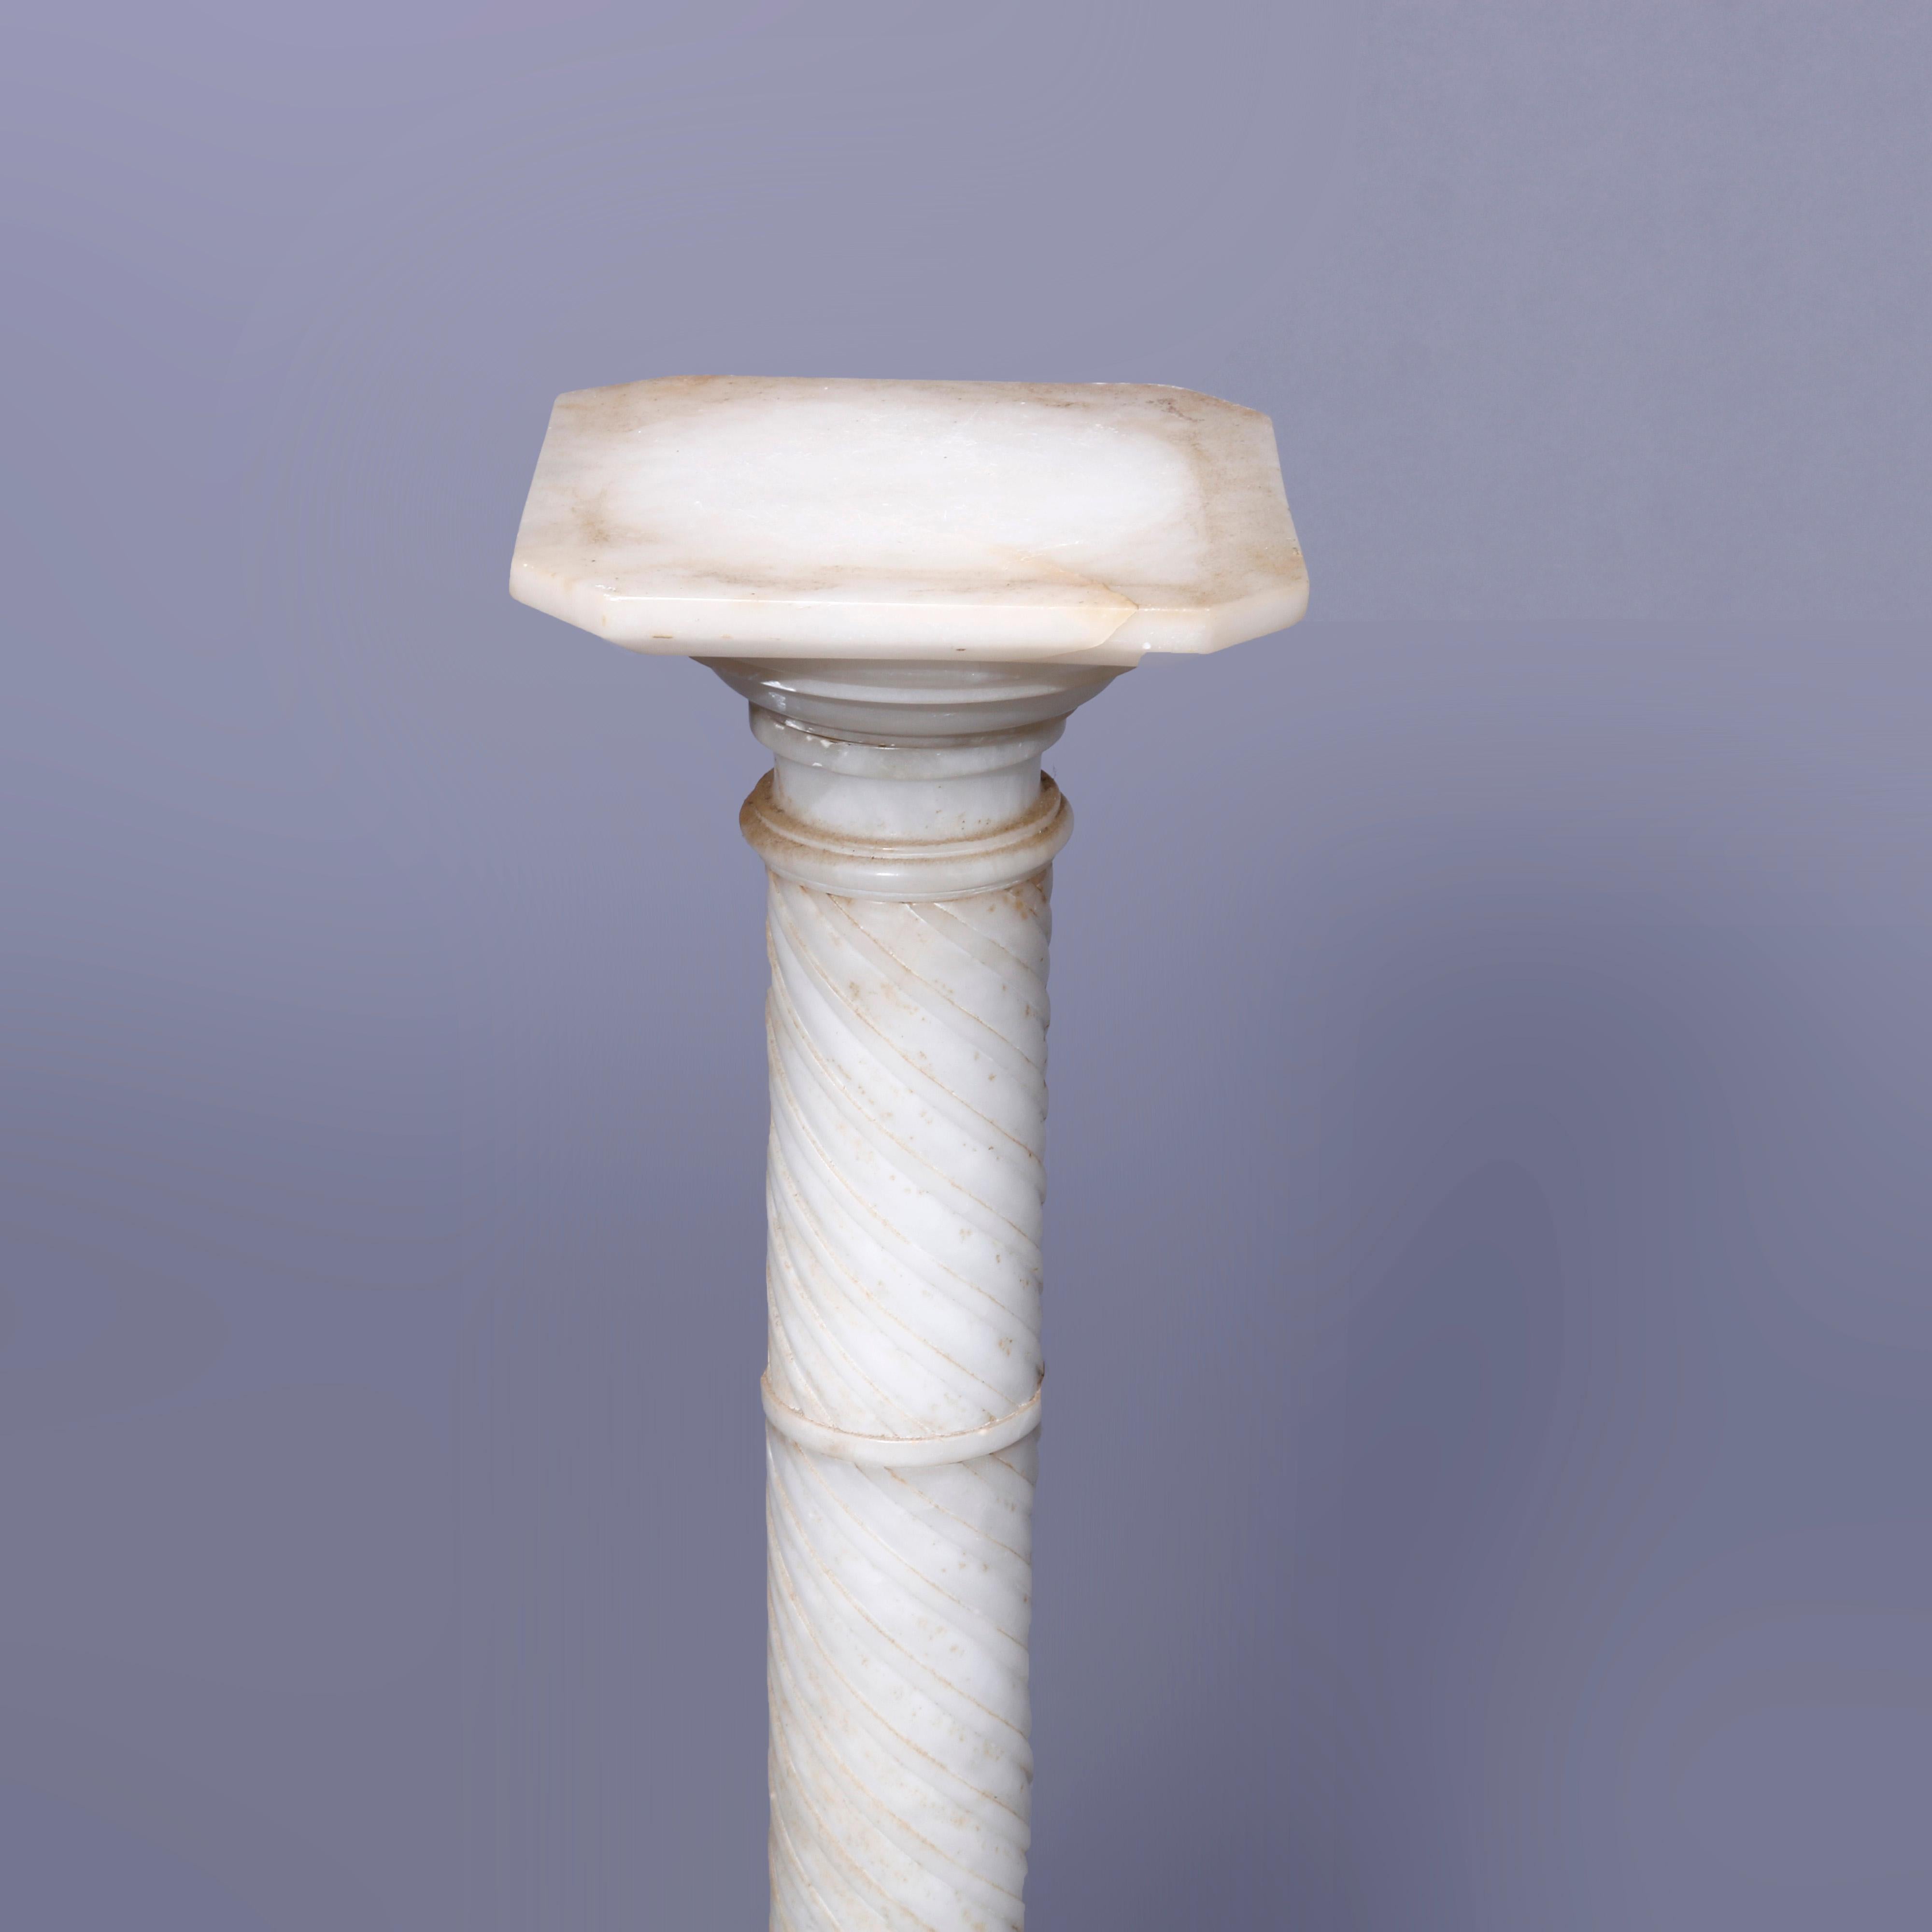 Antique Neoclassical Carved Alabaster Sculpture Pedestal, Rope Twist Form, 1890 For Sale 4